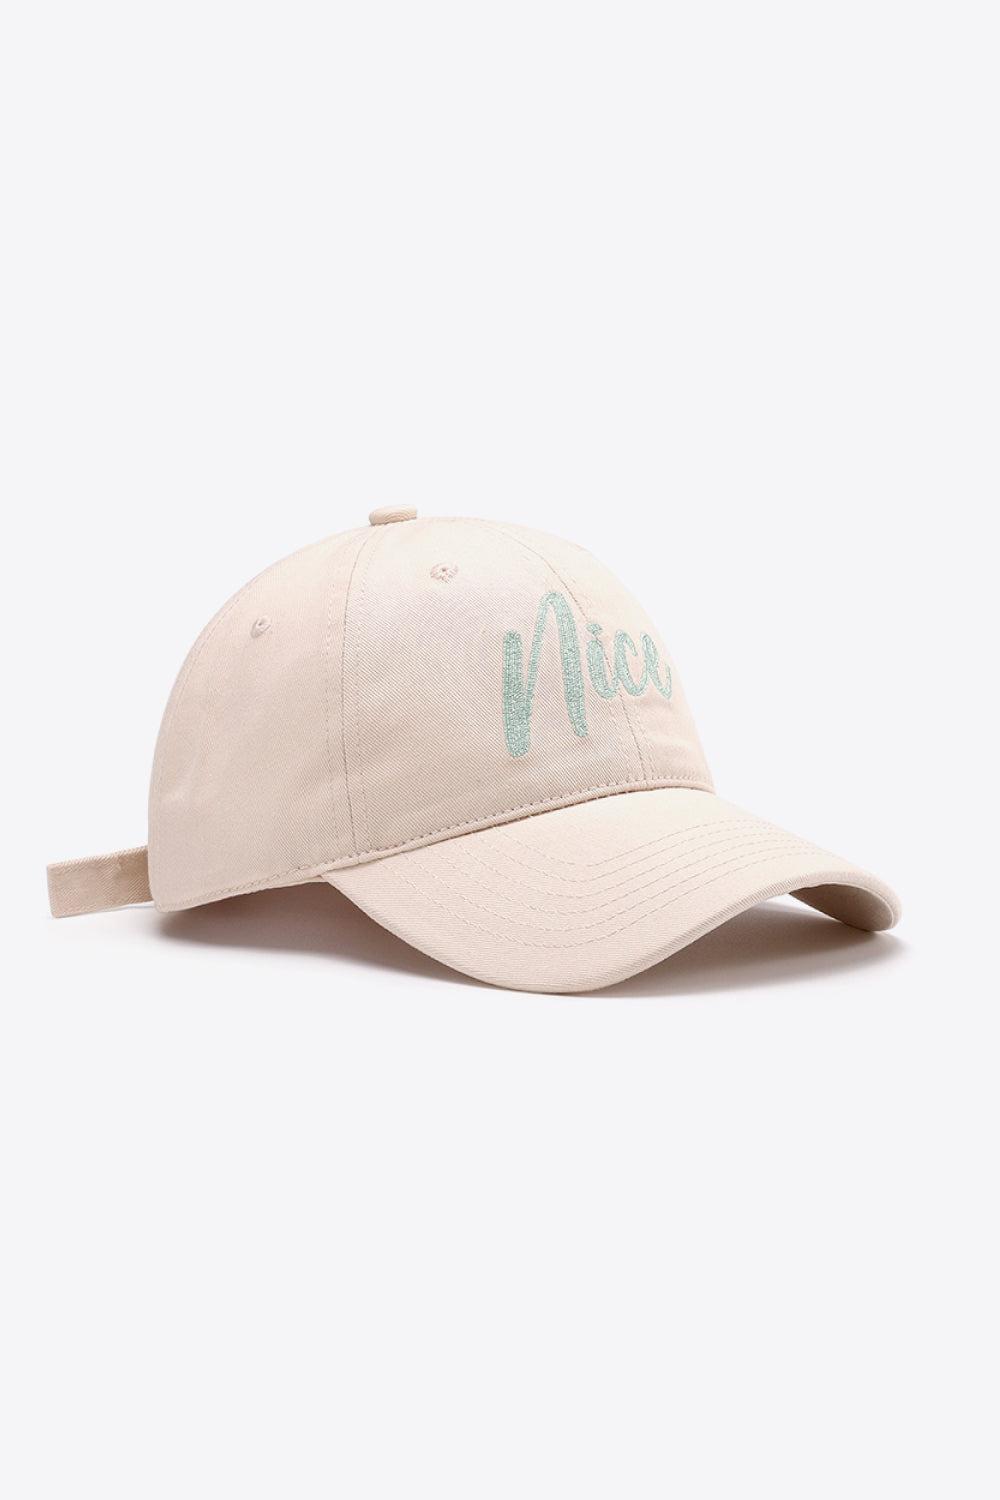 NICE Adjustable Cotton Baseball Cap-HATS-[Adult]-[Female]-2022 Online Blue Zone Planet